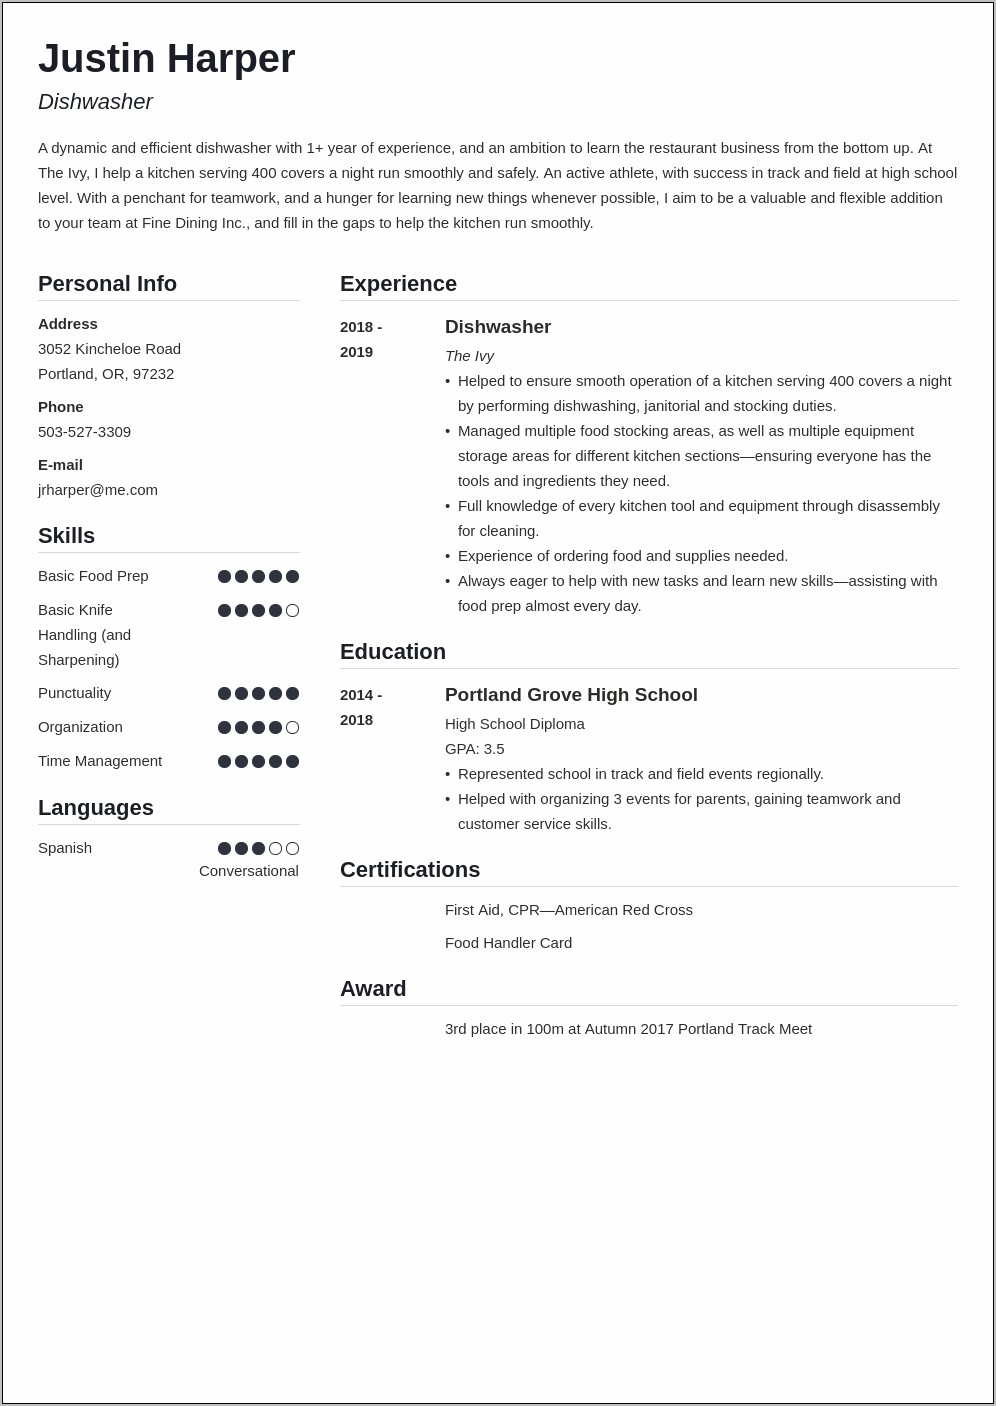 Sample Resume For Restaurant Worker Dishwasher